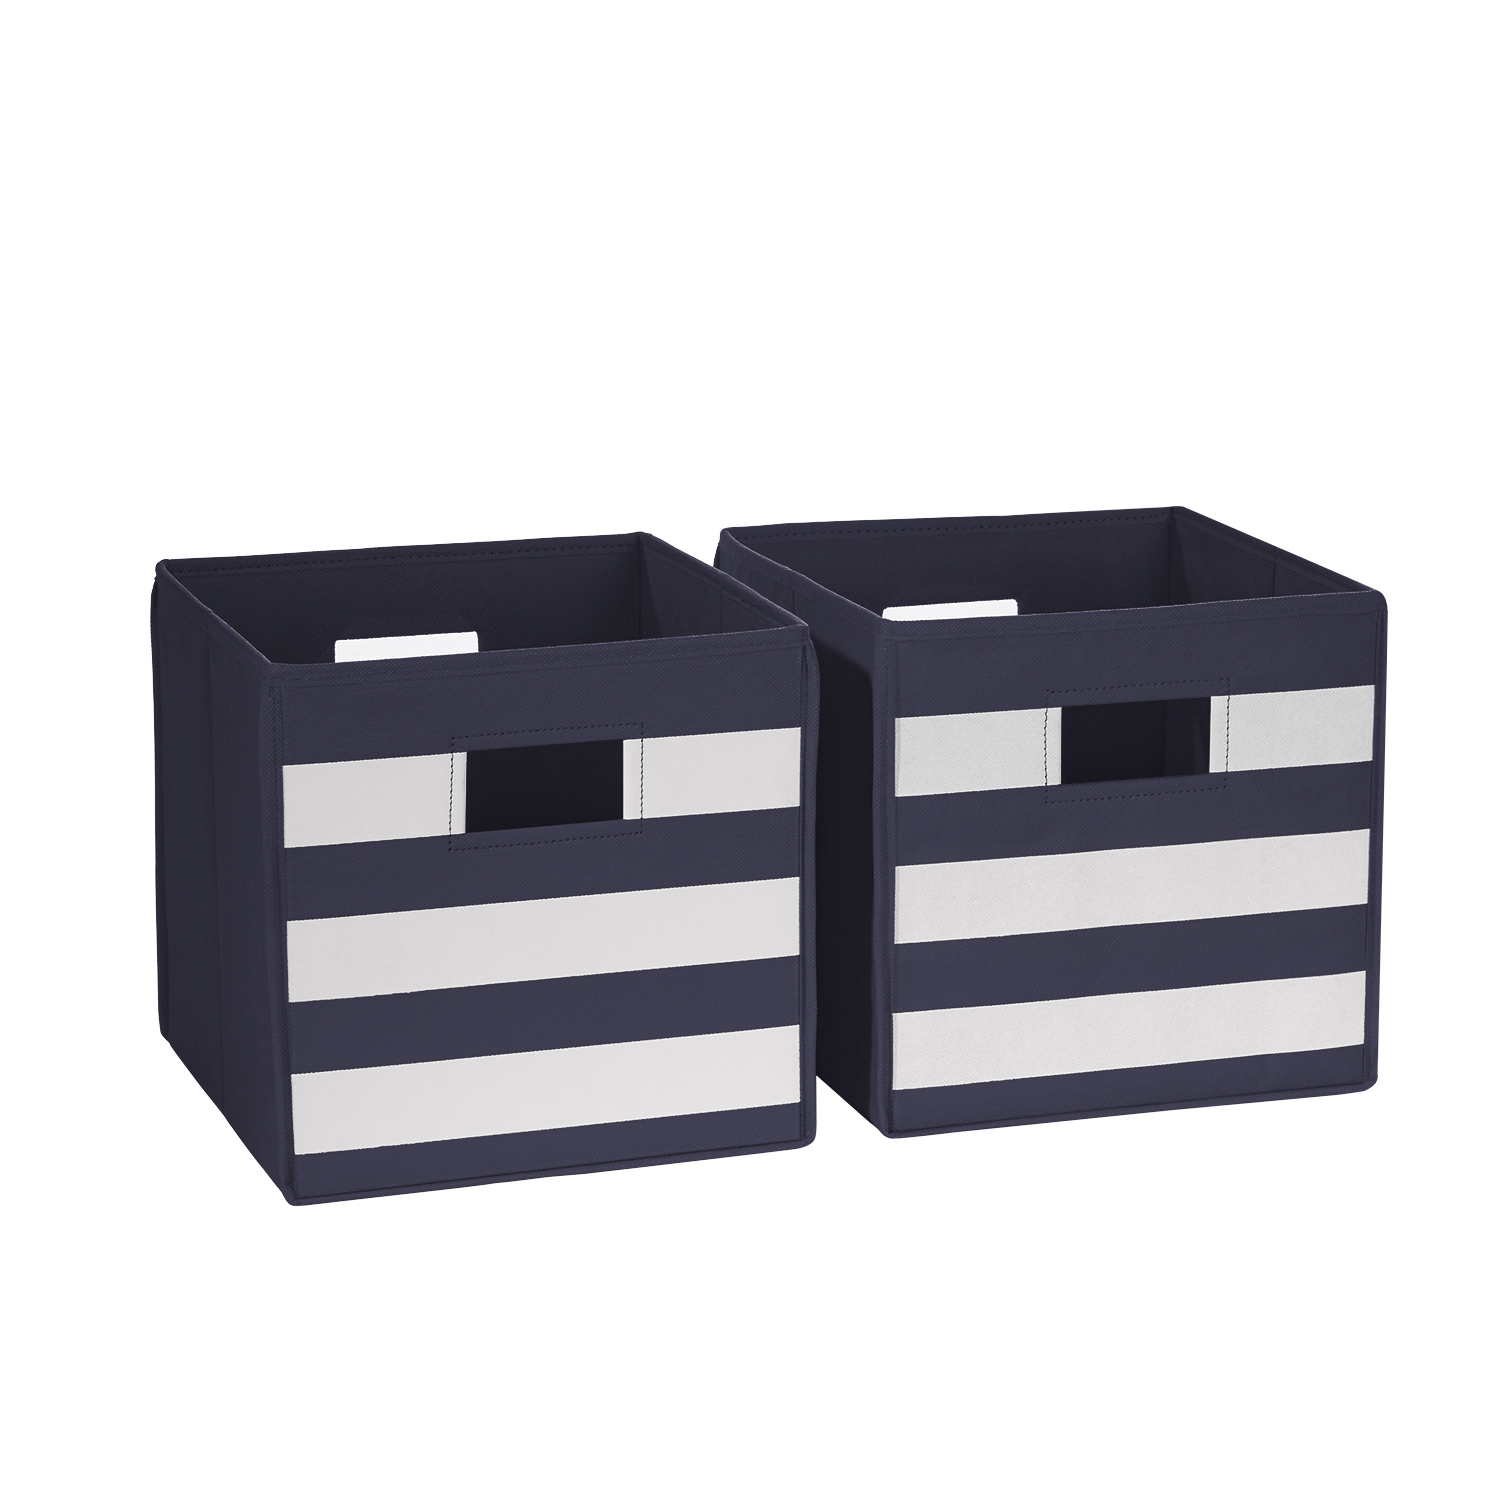 RiverRidge 2 Pc Folding Storage Bin Set - Navy with Stripes - image 1 of 4